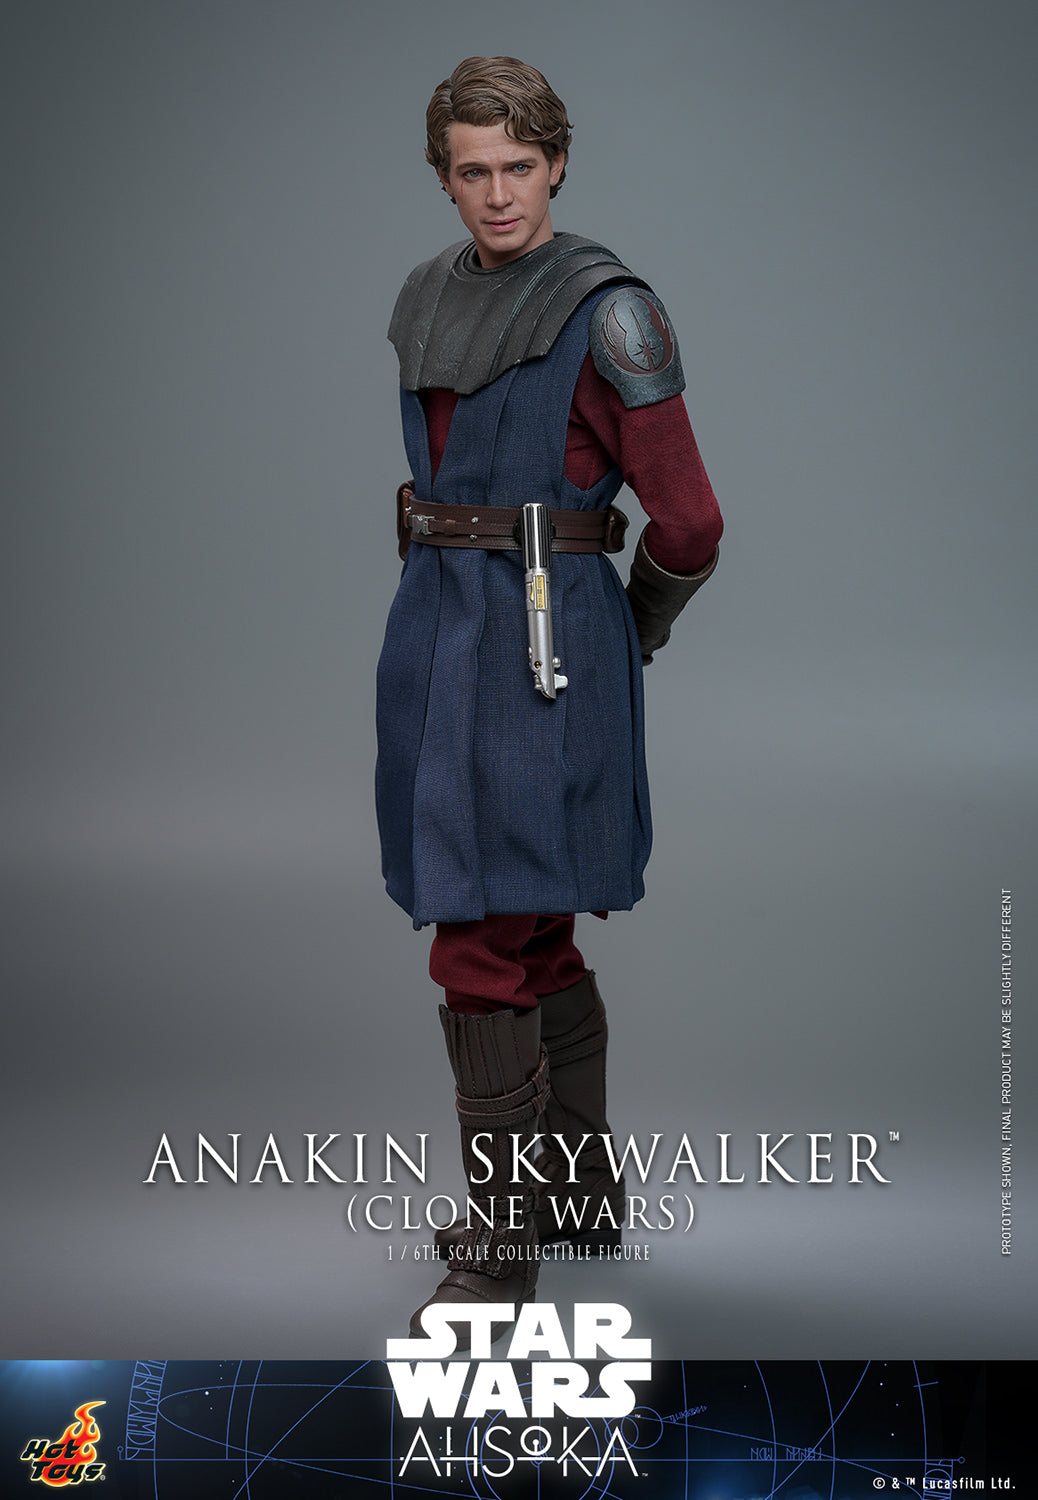 Anakin Skywalker (Clone Wars) Sixth Scale Figure by Hot Toys